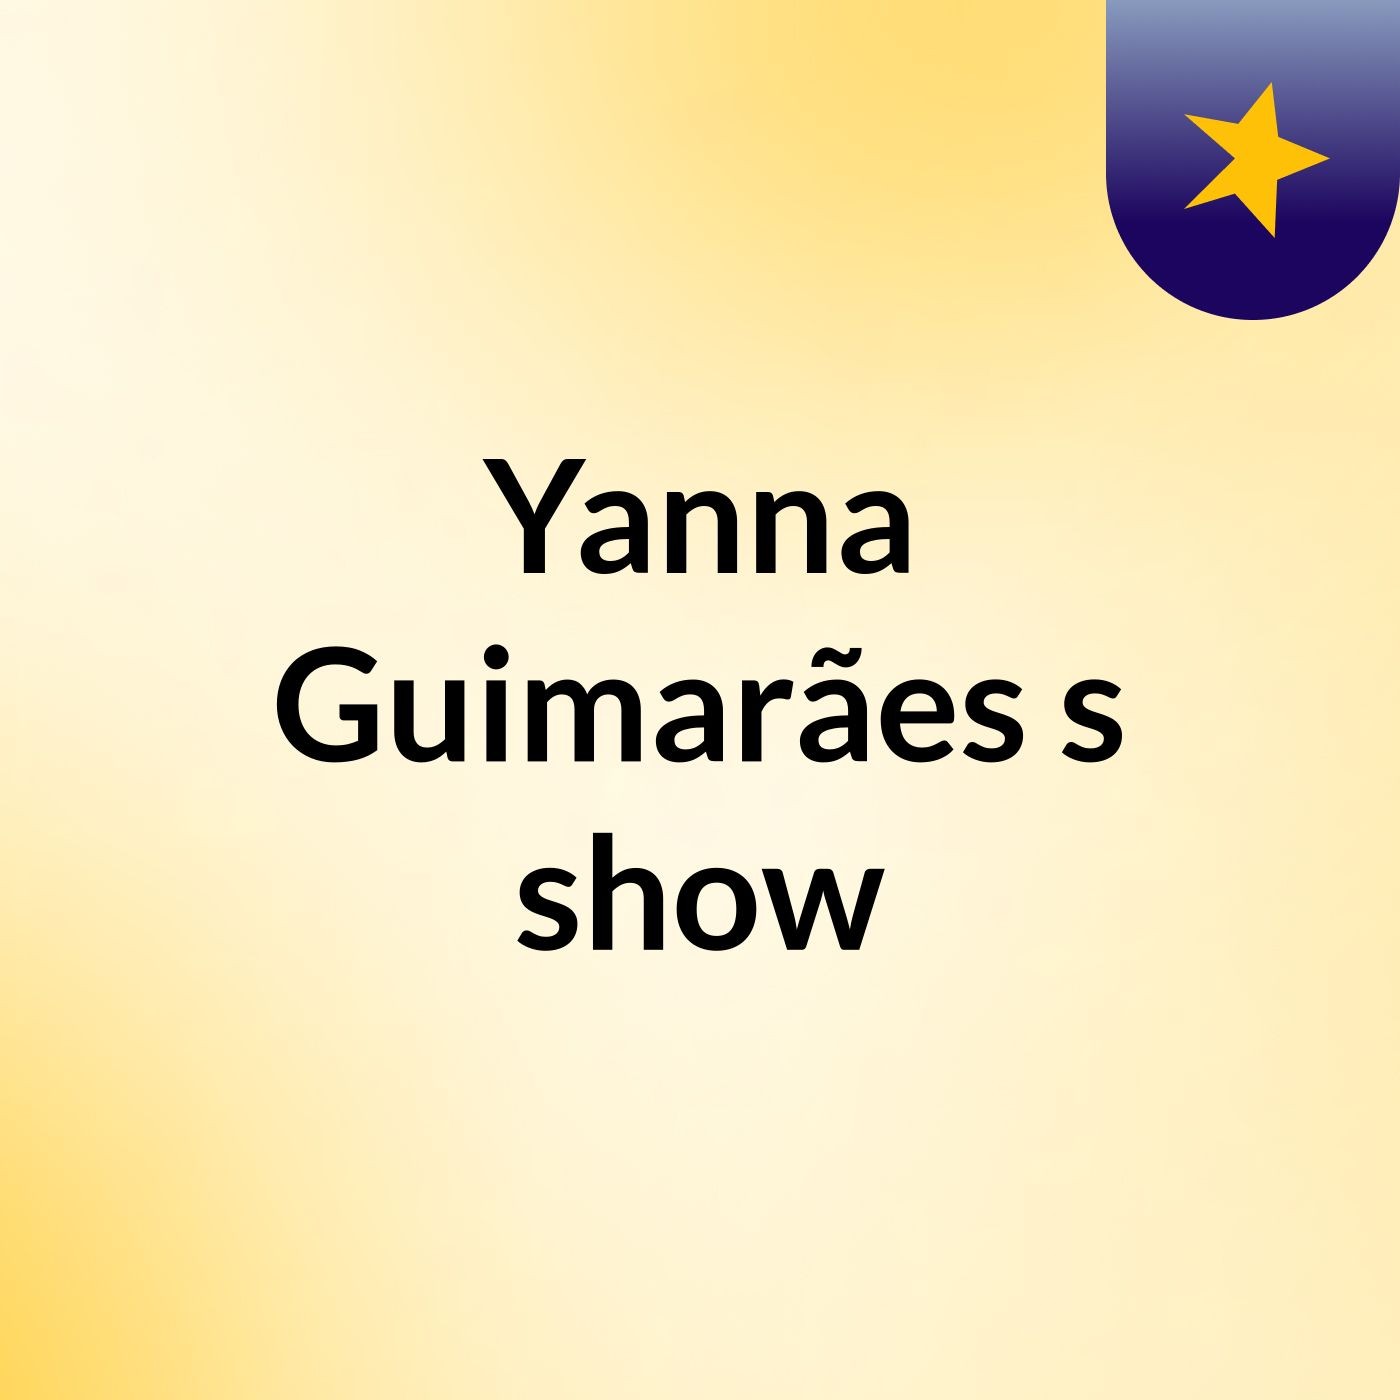 Yanna Guimarães's show